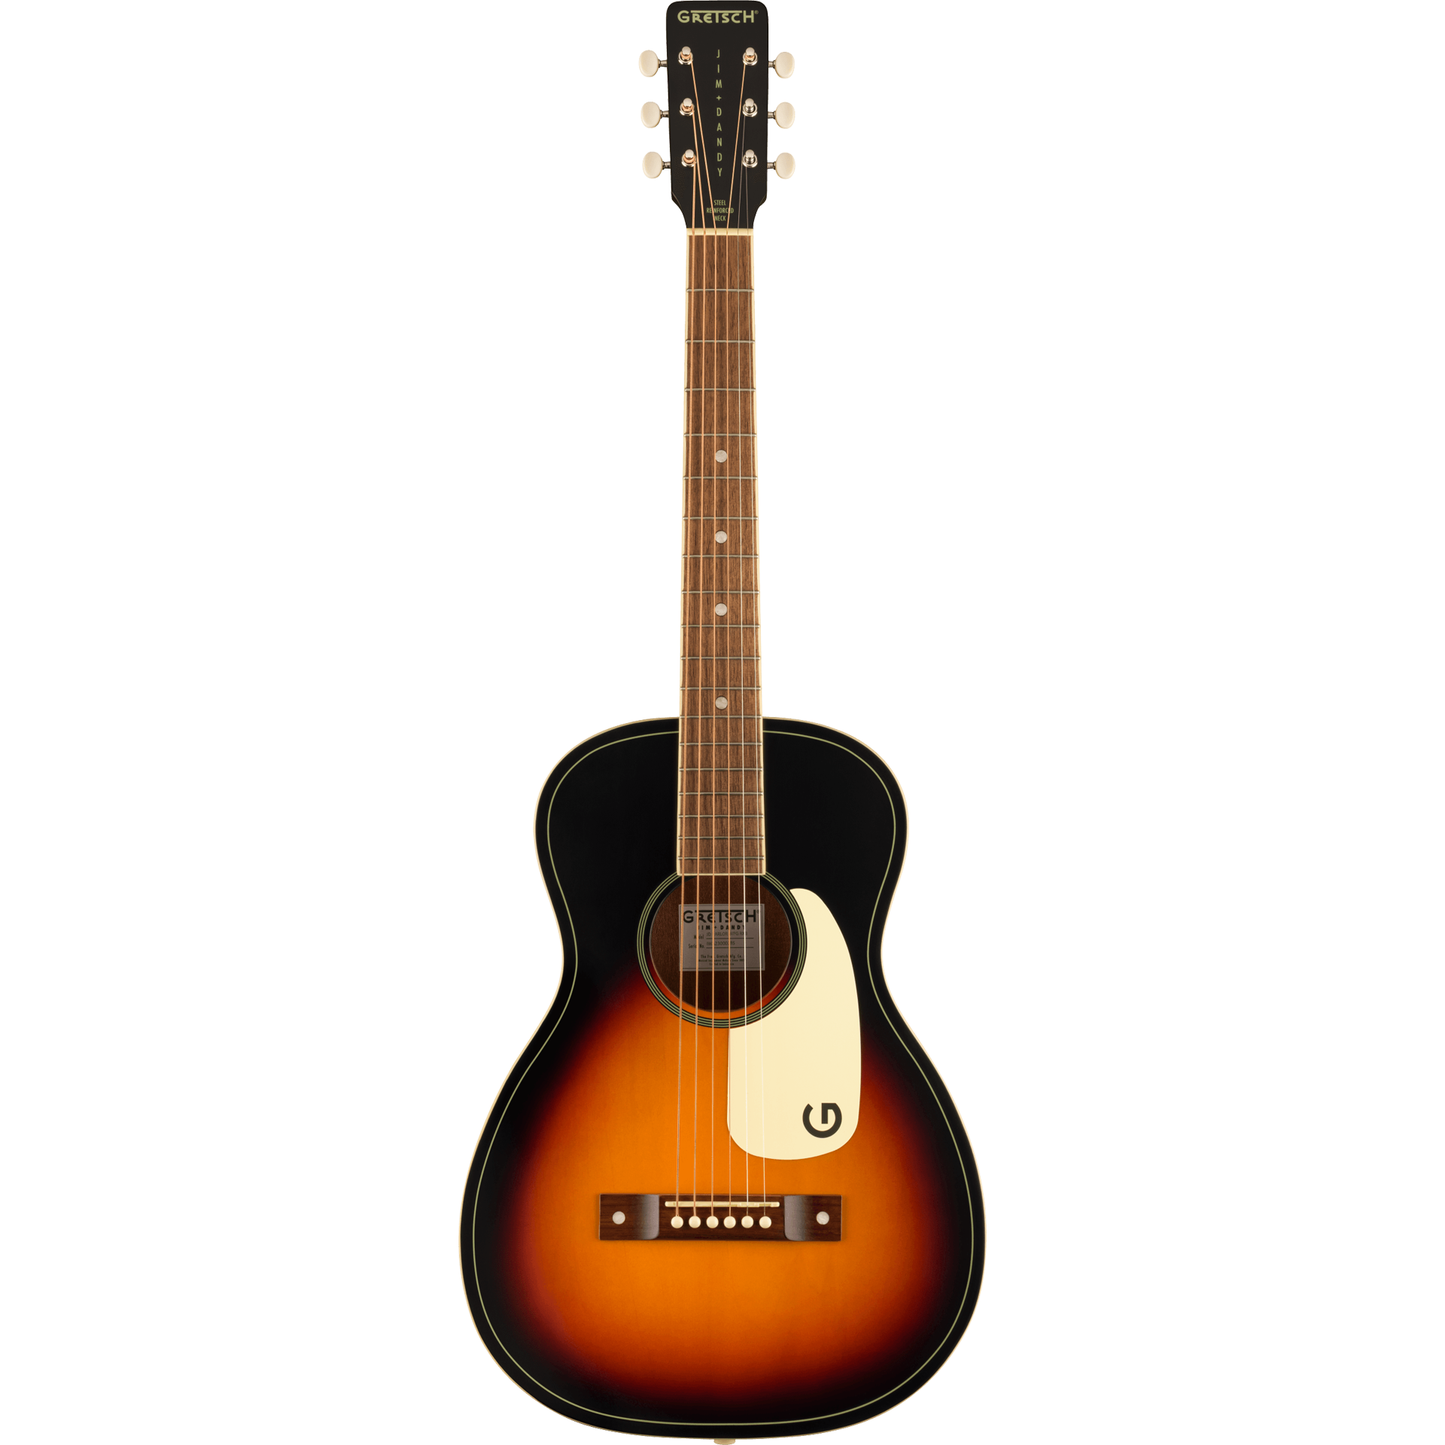 Gretsch Jim Dandy Acoustic Guitar - Walnut Fingerboard, Rex Burst